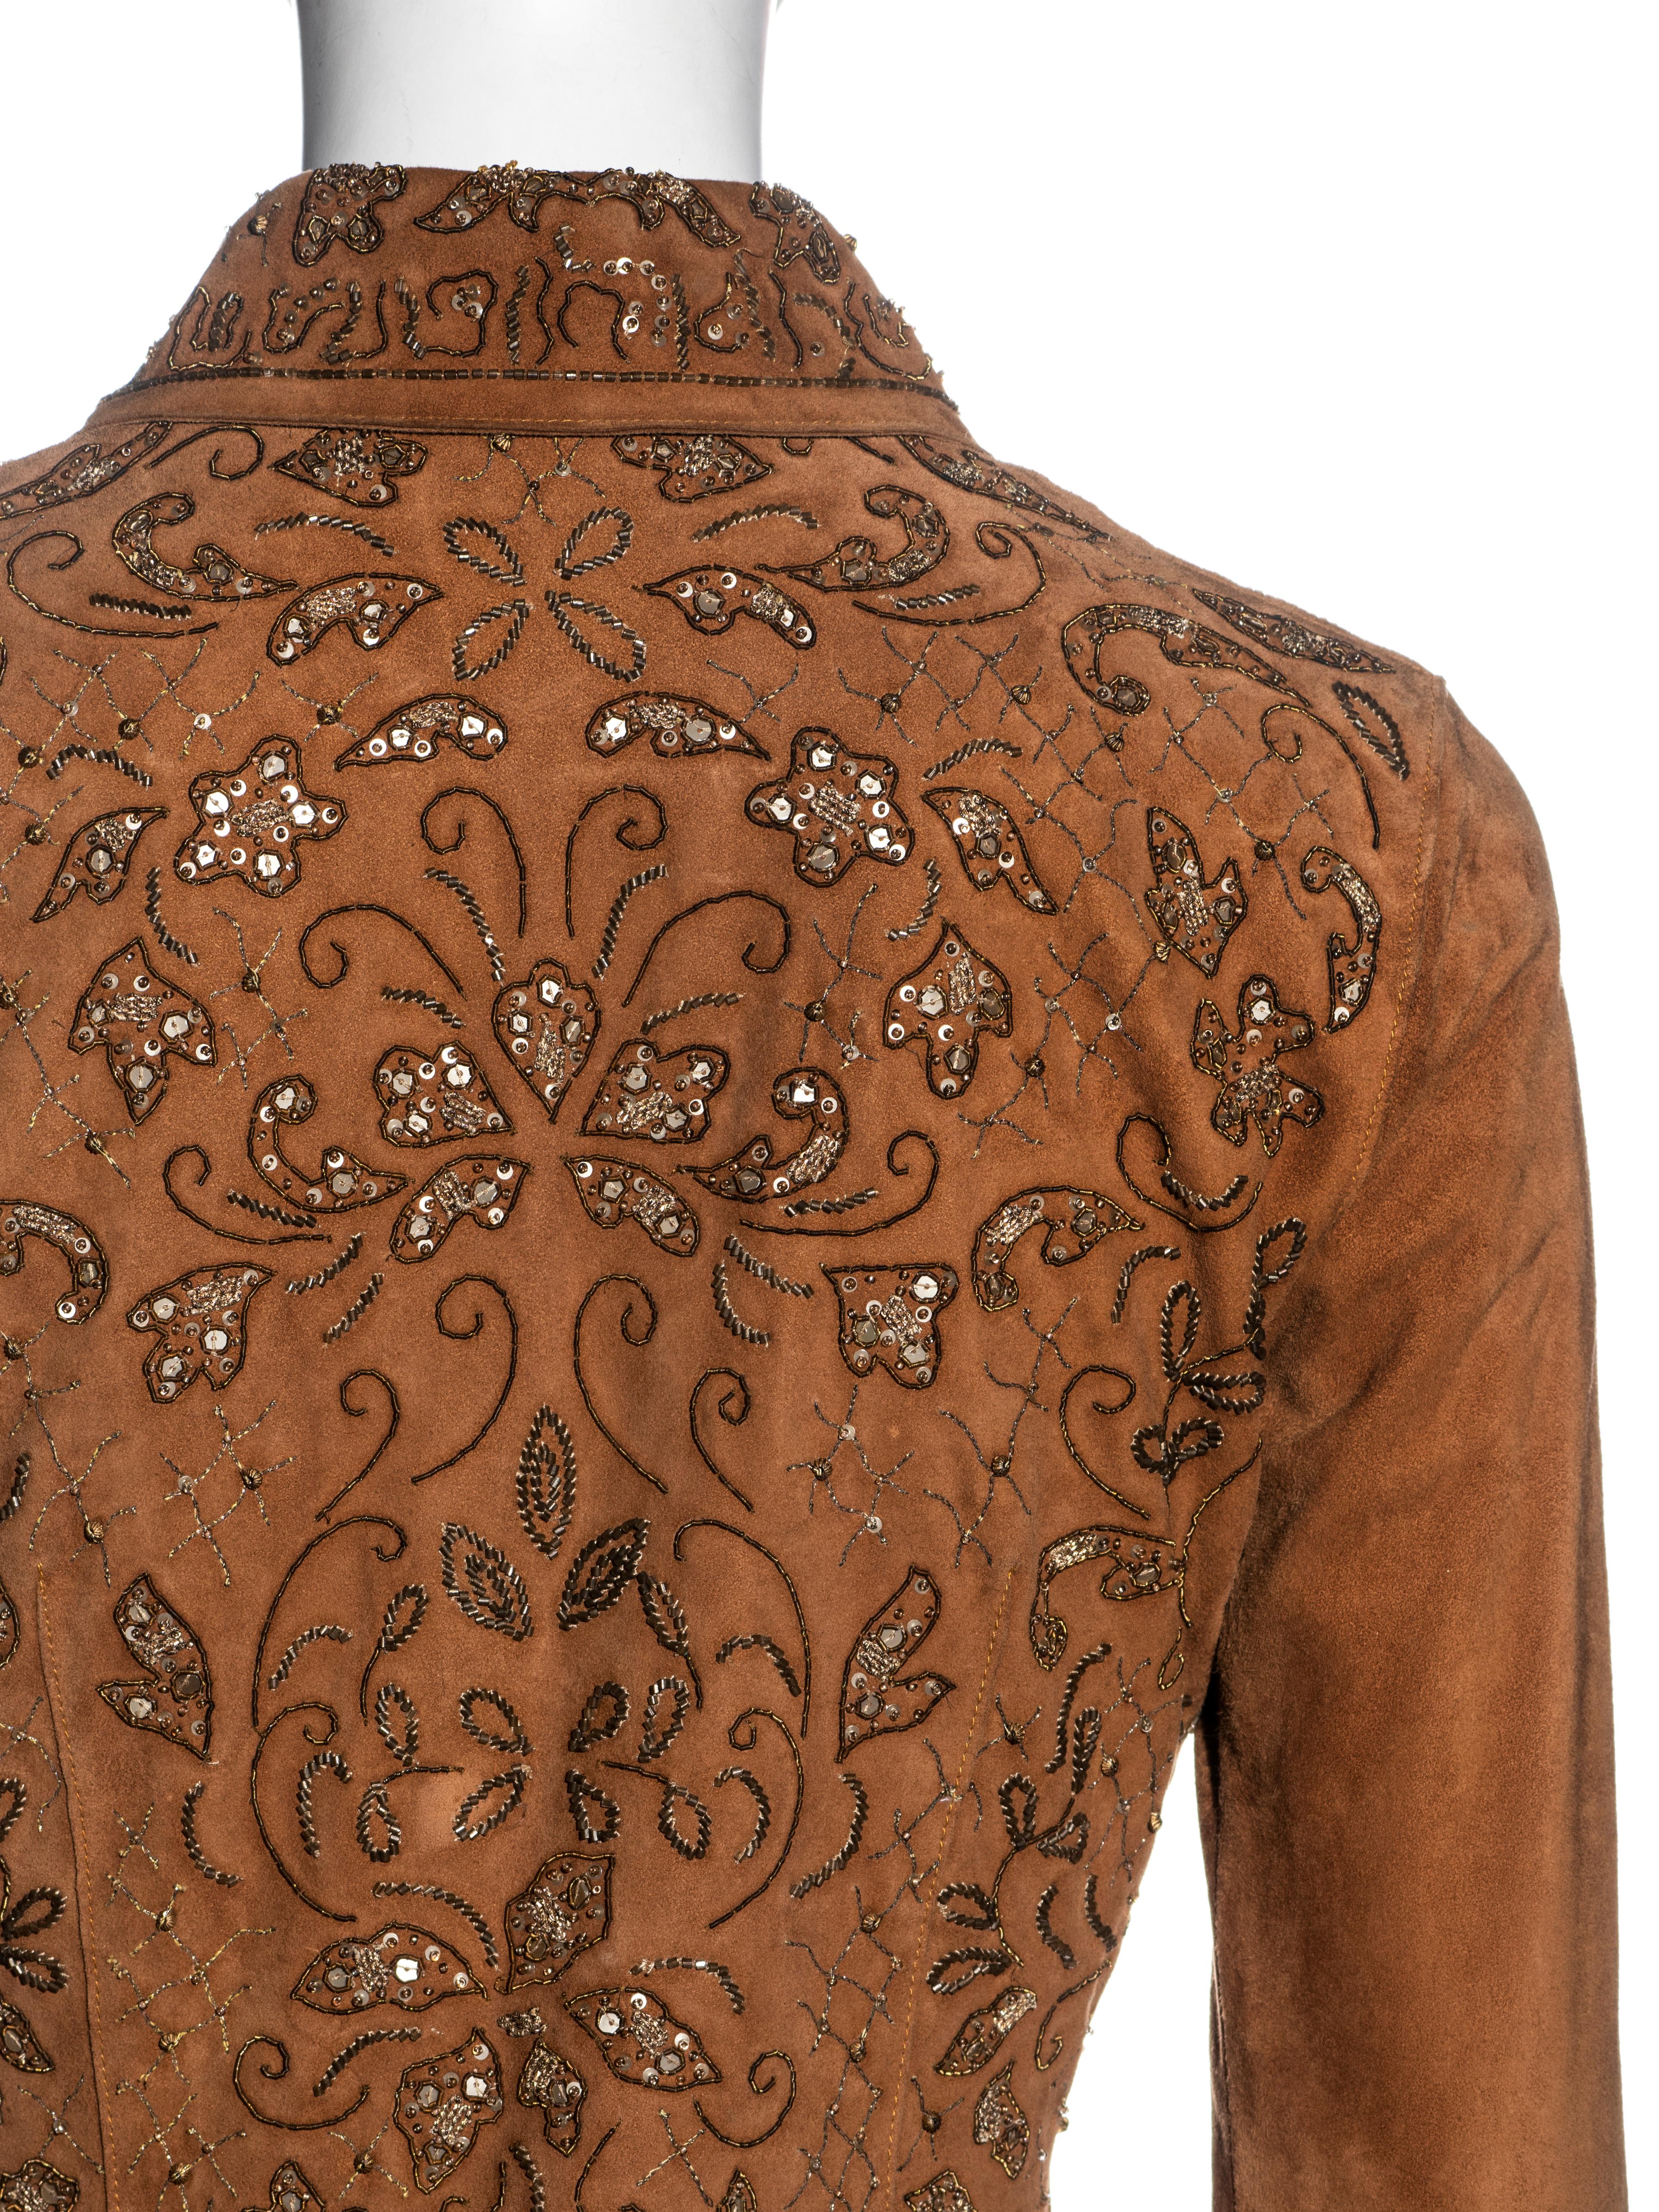 Dolce & Gabbana brown goat suede embellished shirt, ss 2001 5